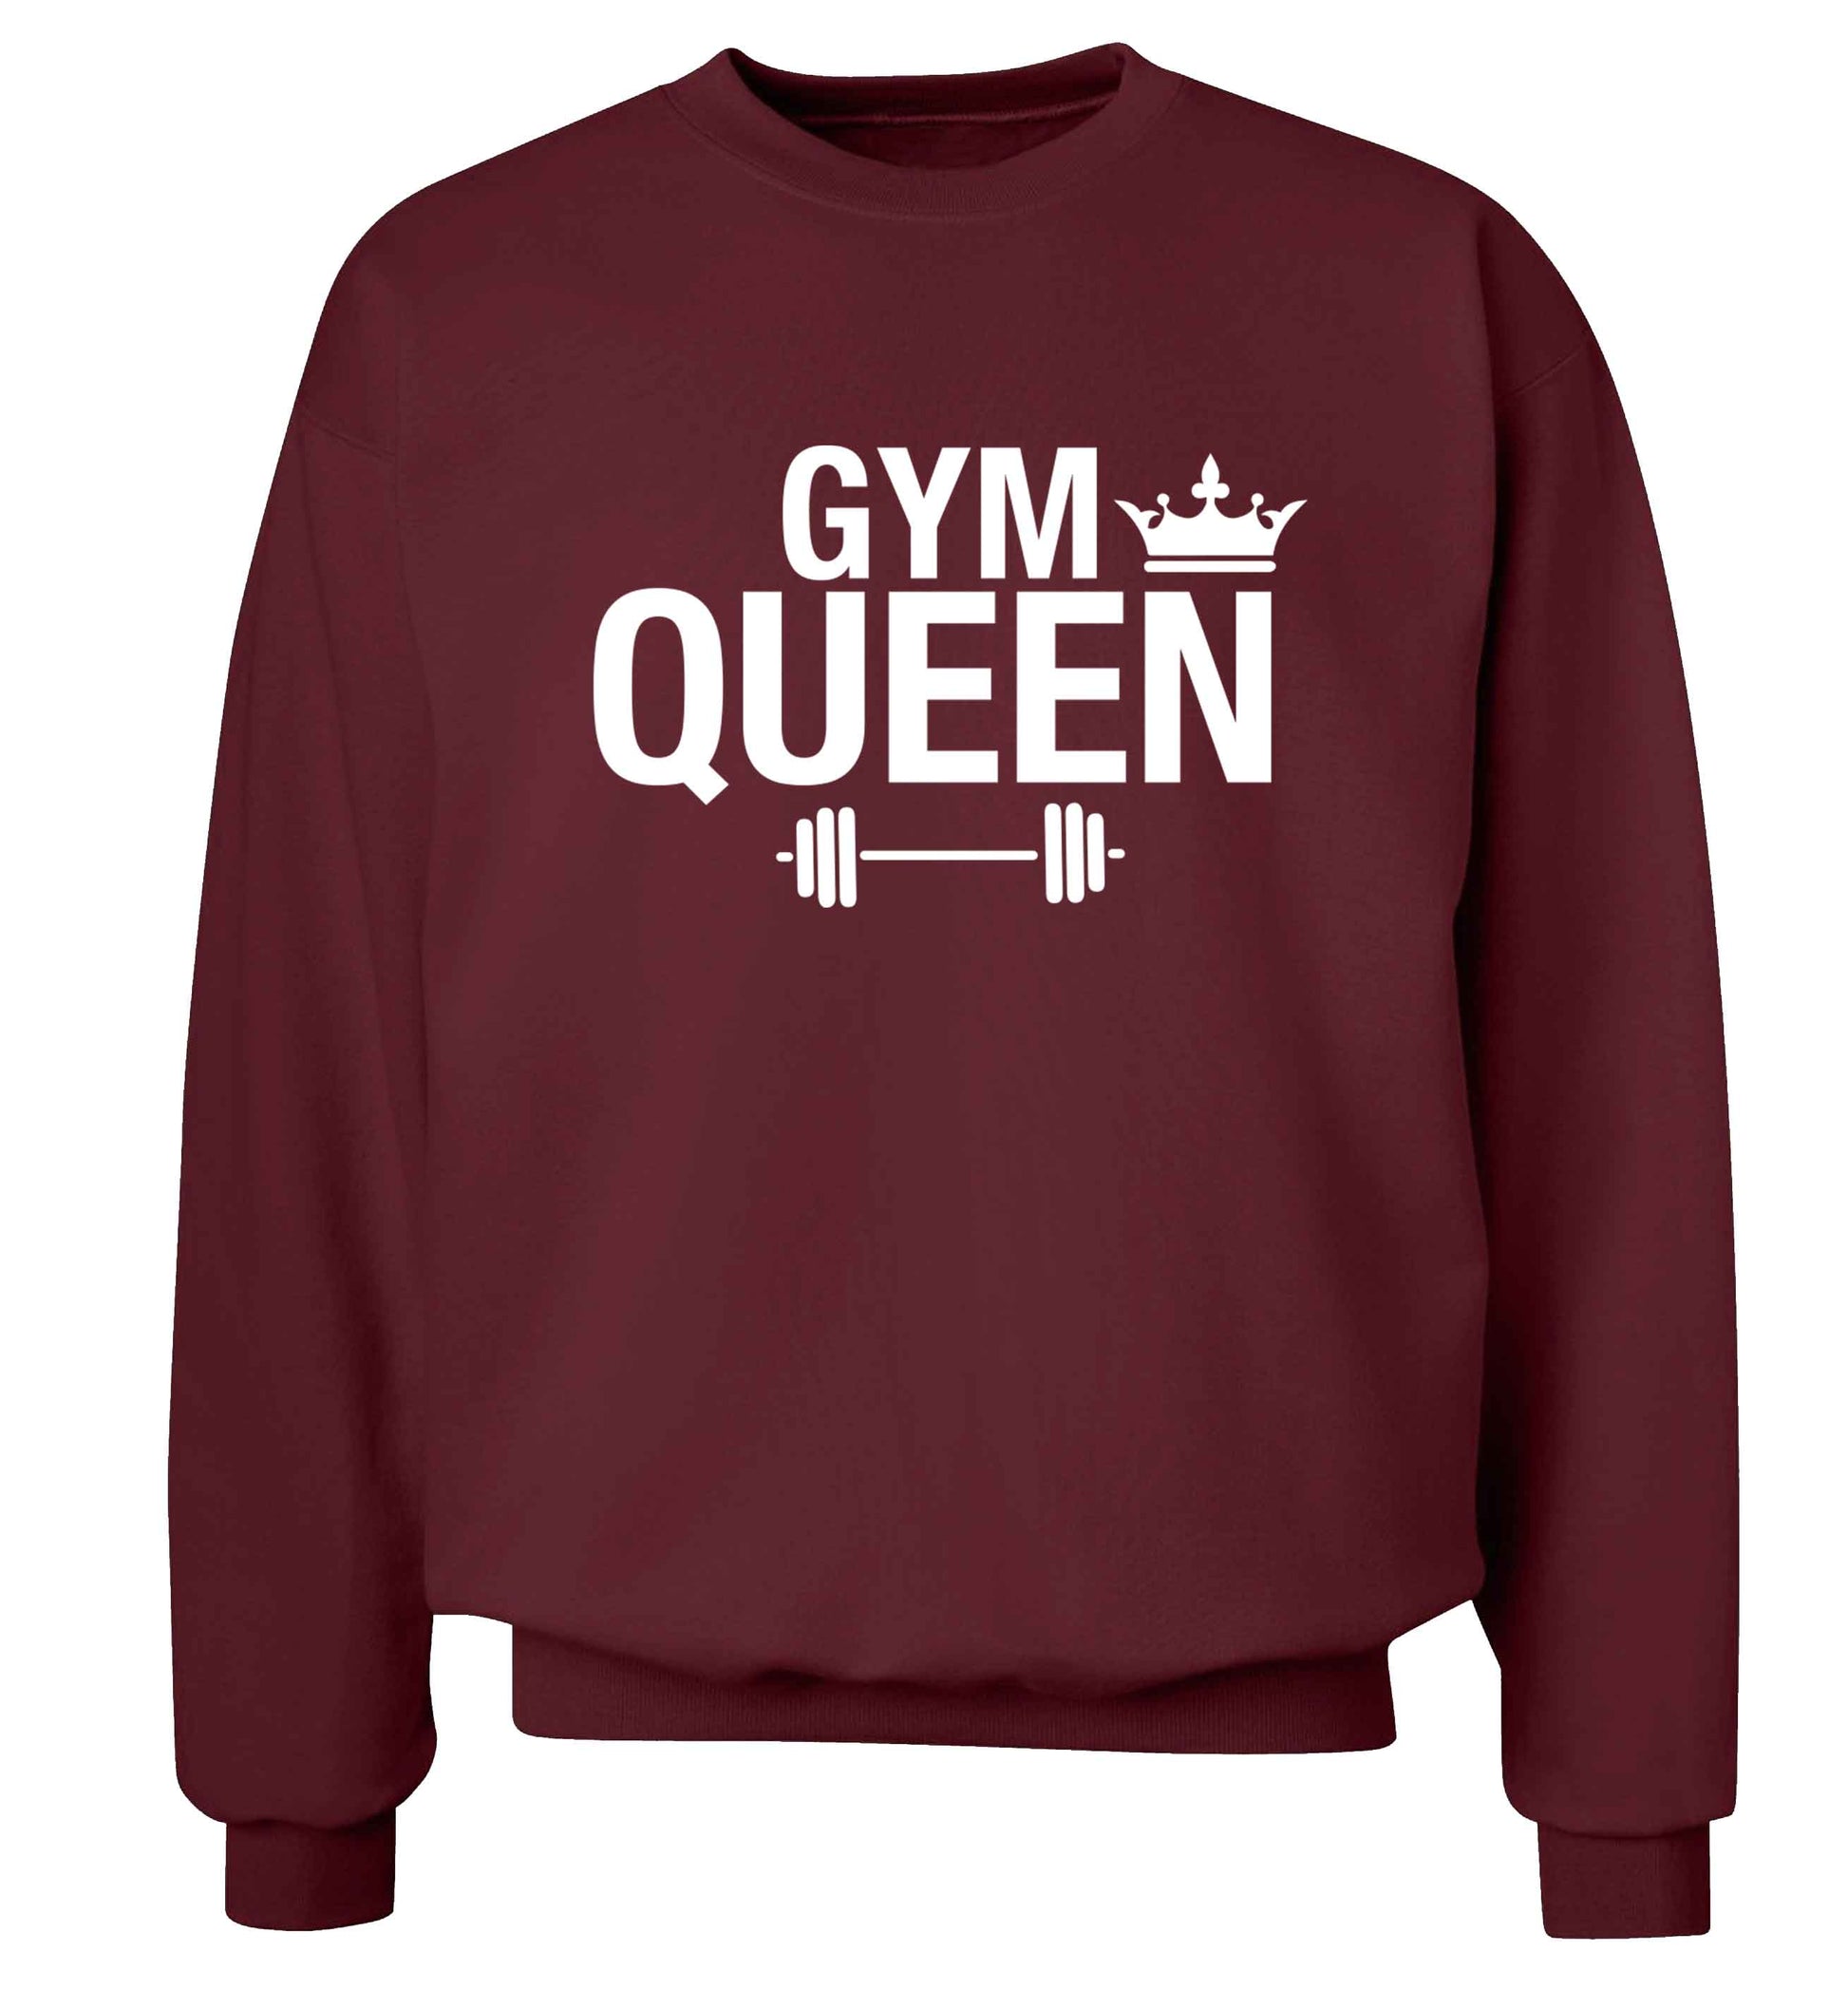 Gym queen Adult's unisex maroon Sweater 2XL